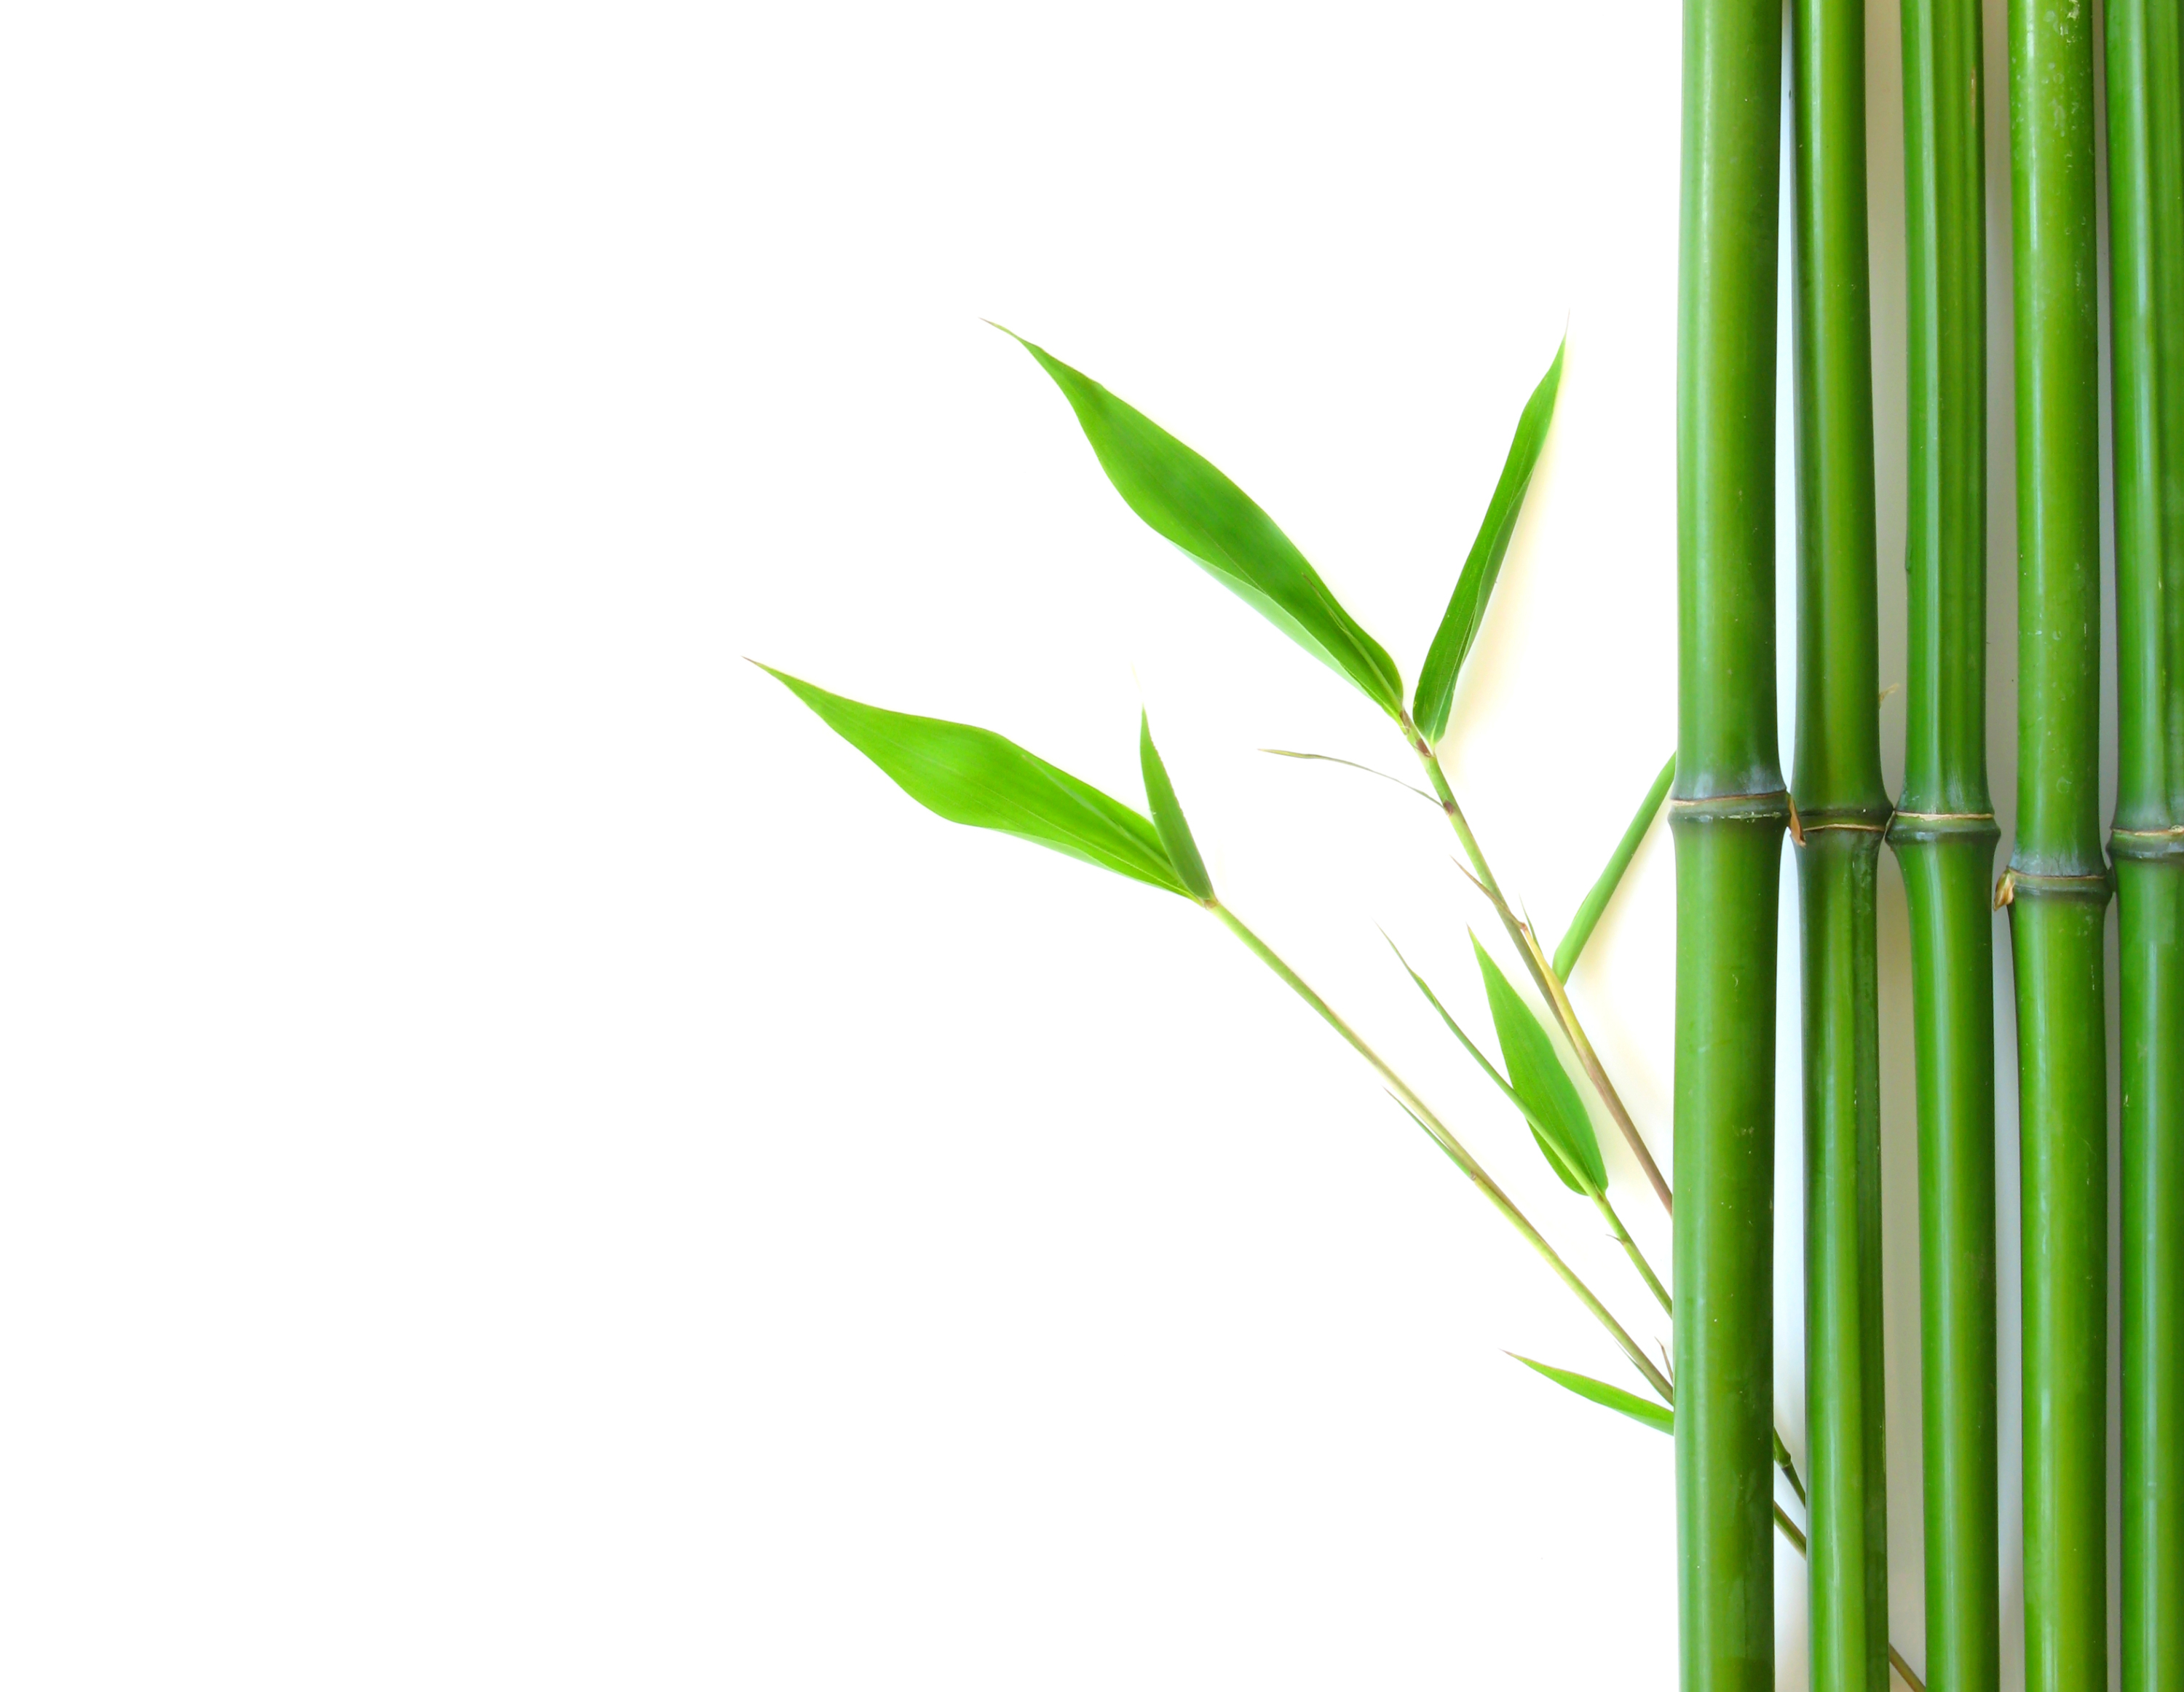 bamboo stalk clipart